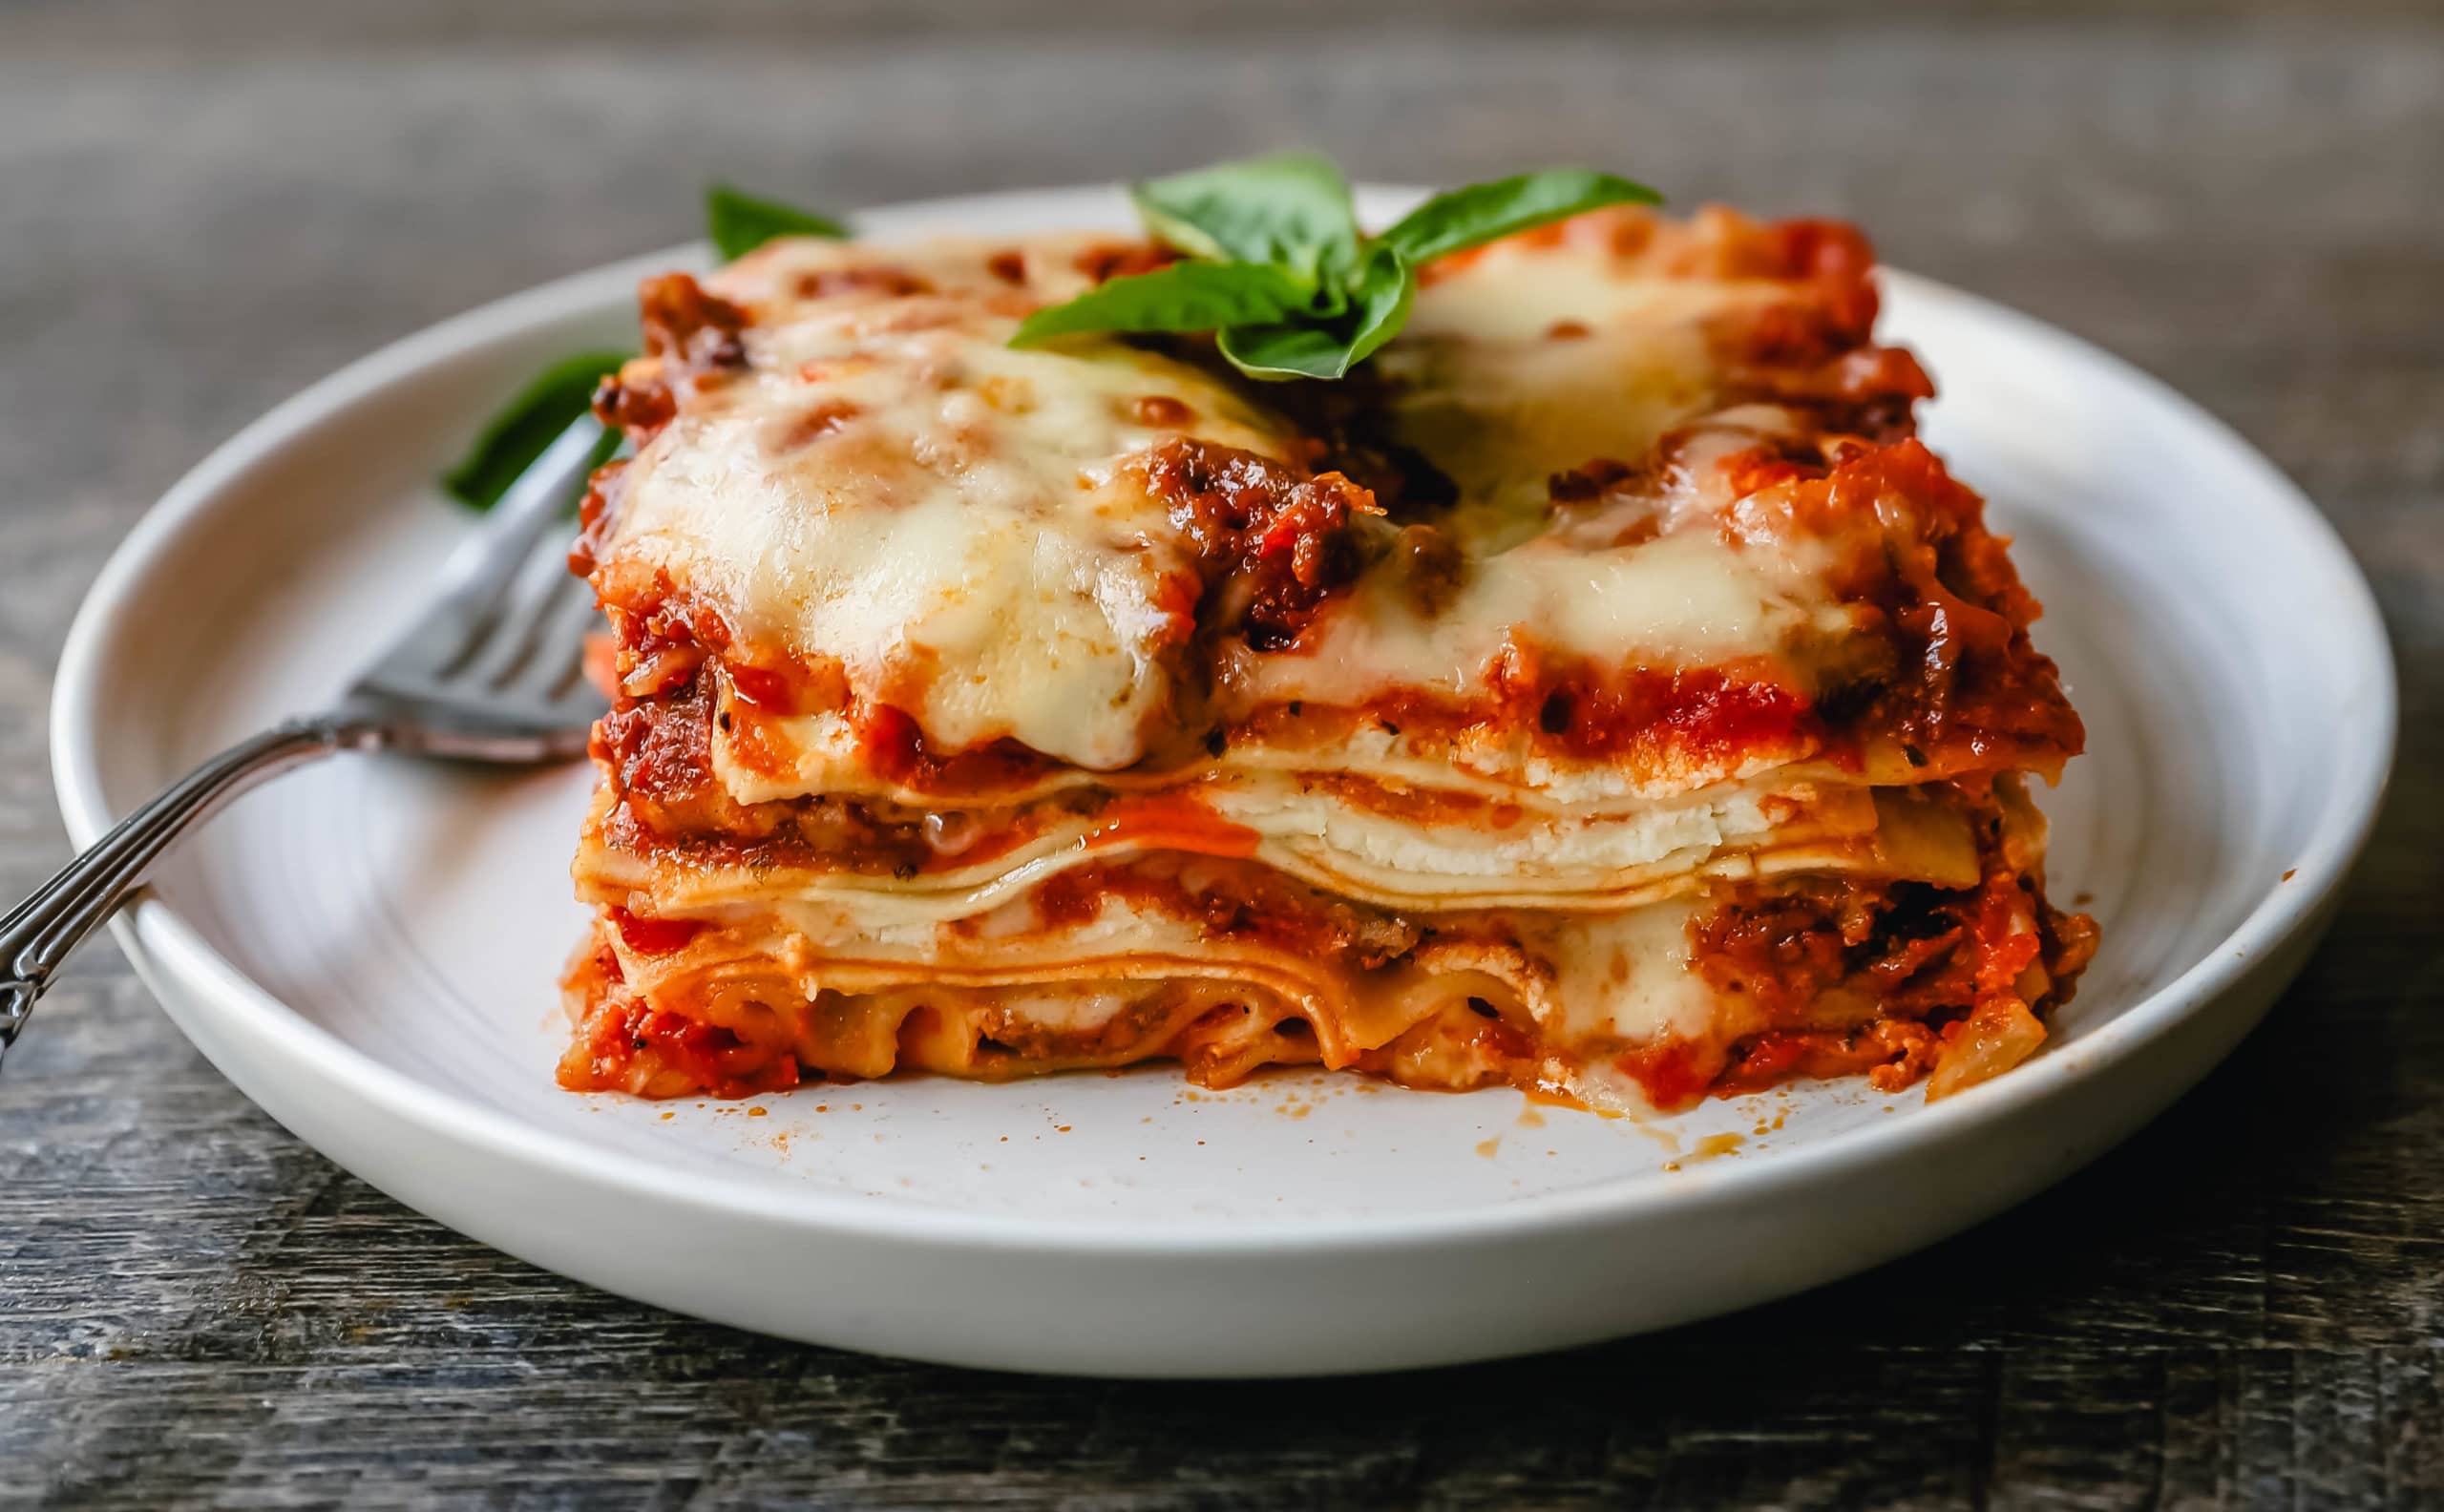 How to Prepare a Classic Lasagna